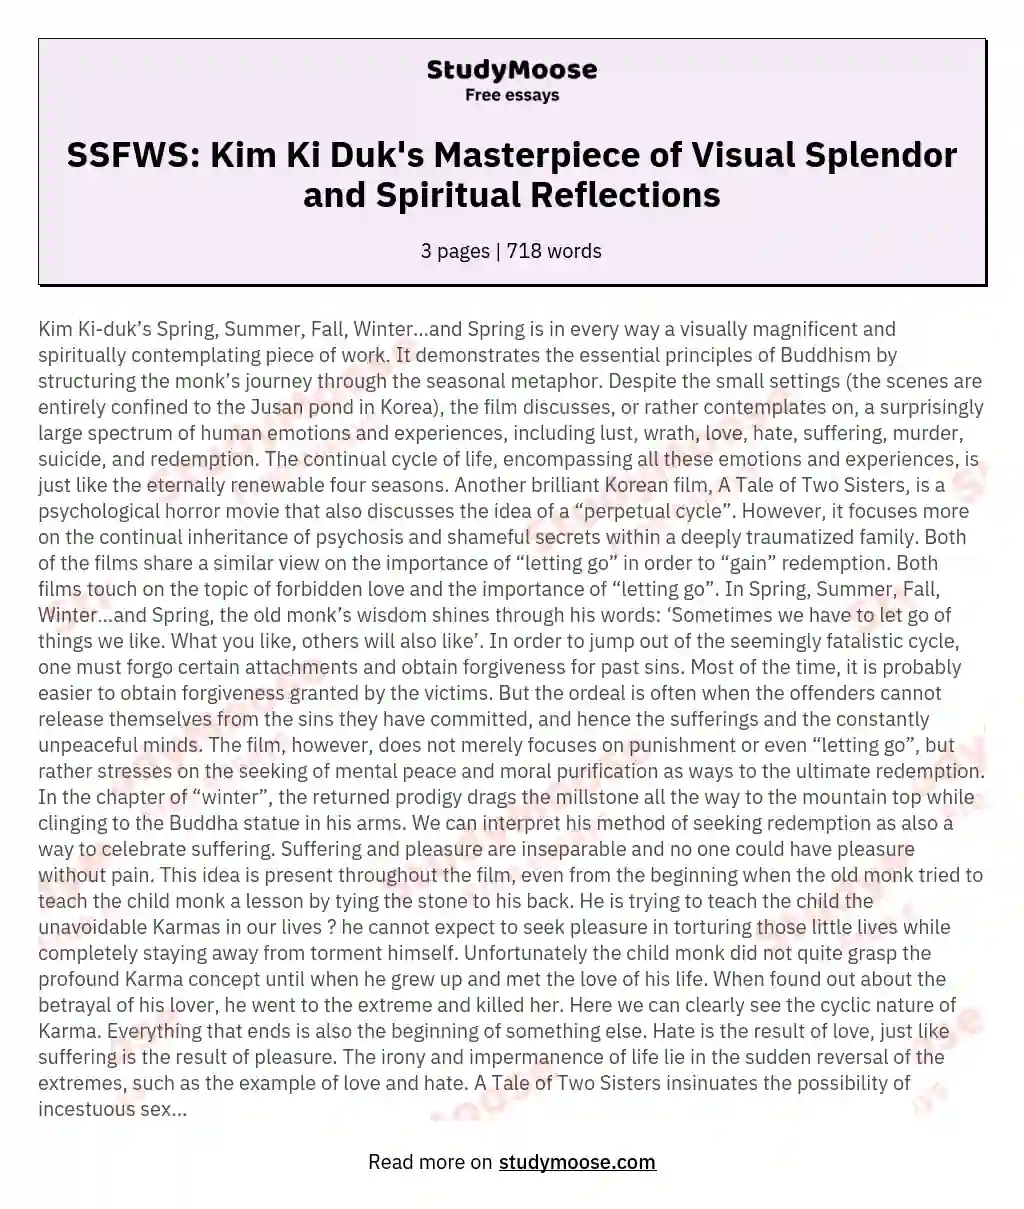 SSFWS: Kim Ki Duk's Masterpiece of Visual Splendor and Spiritual Reflections essay